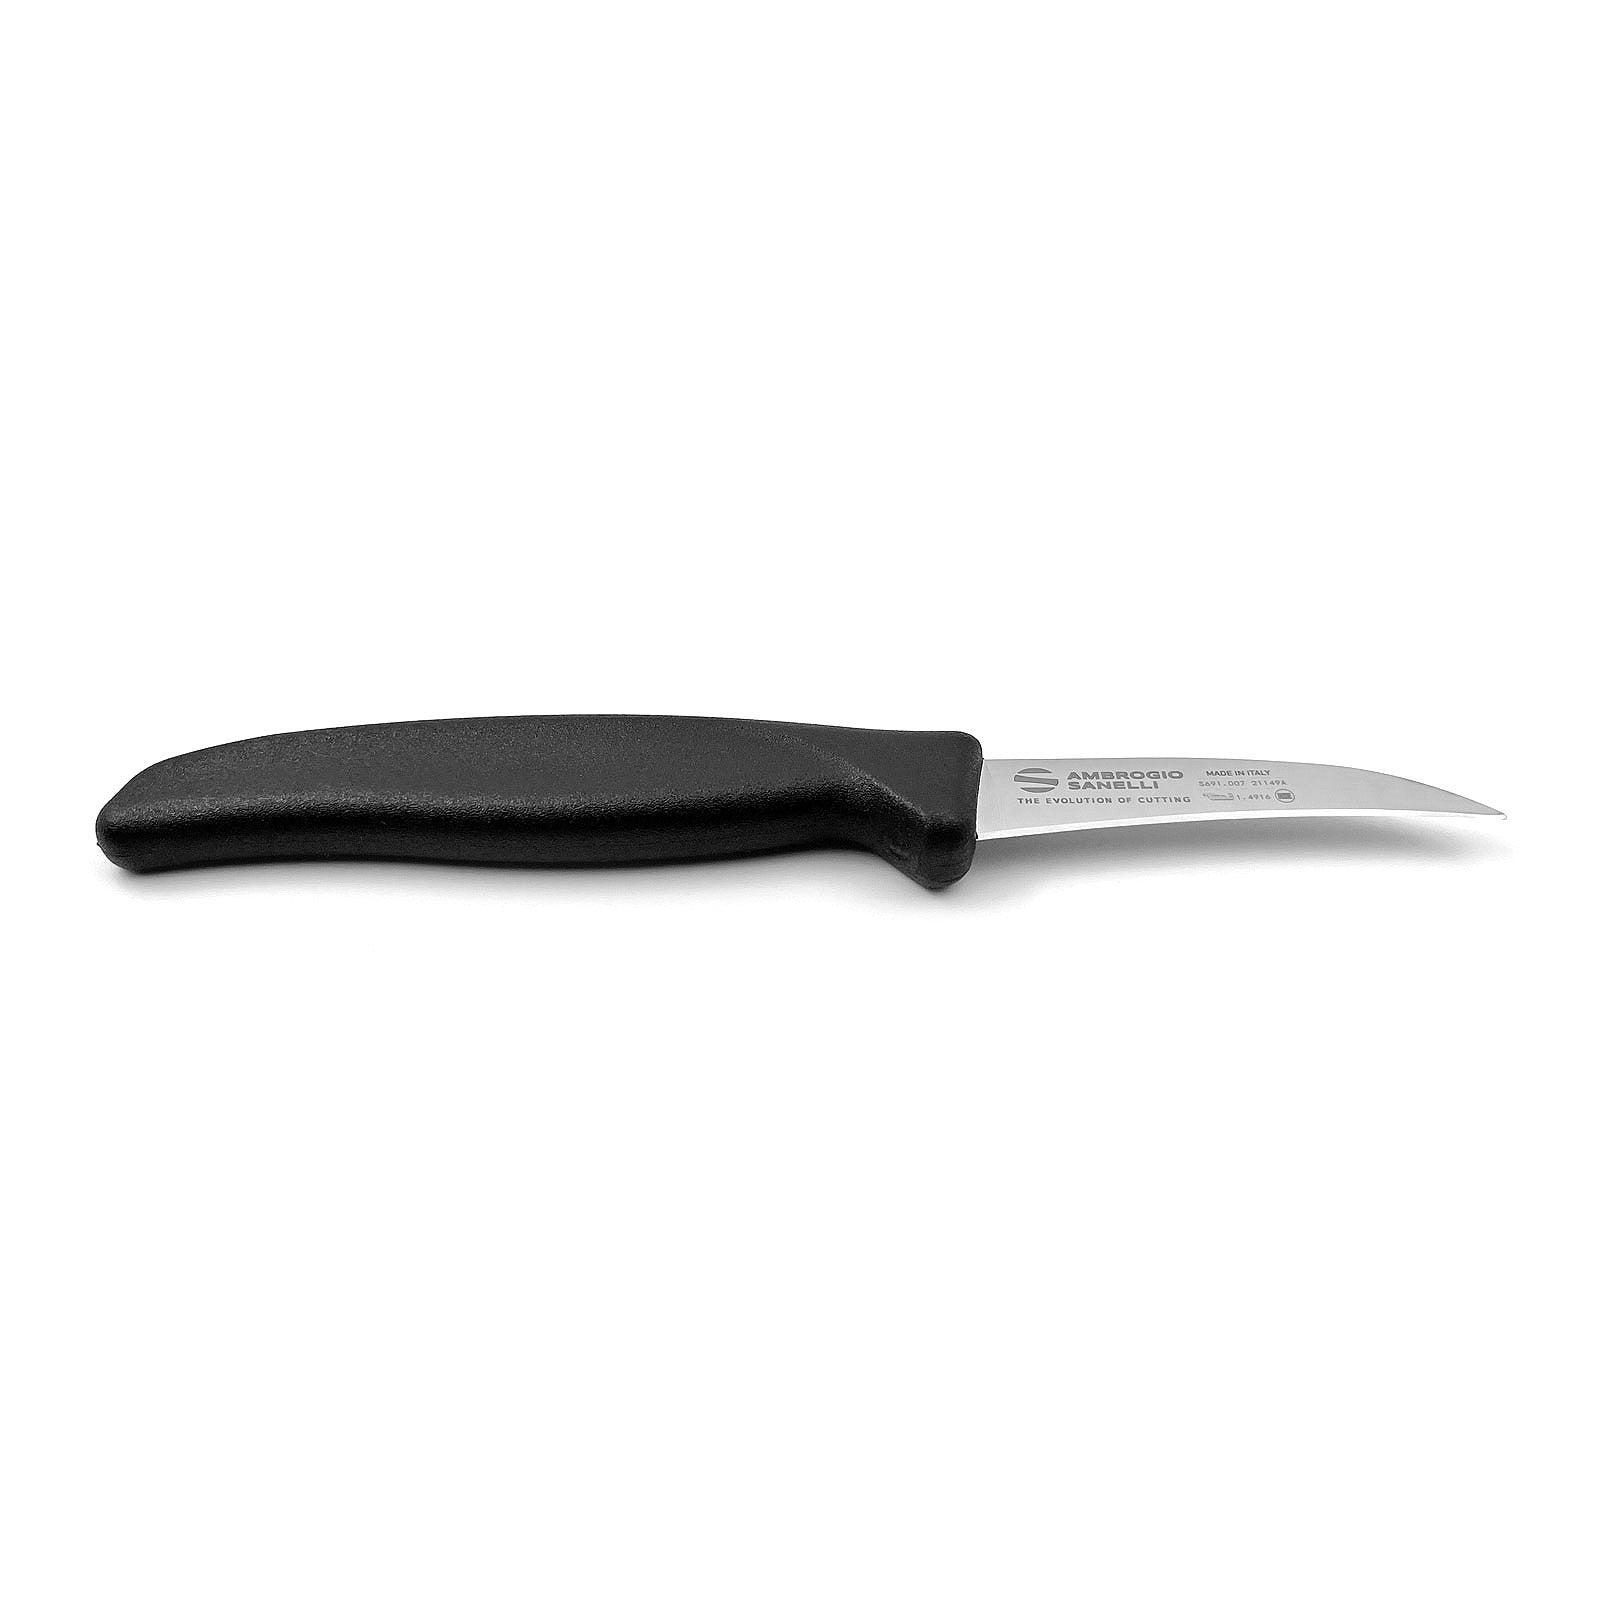 Truffle knife (ambrogio sanelli)